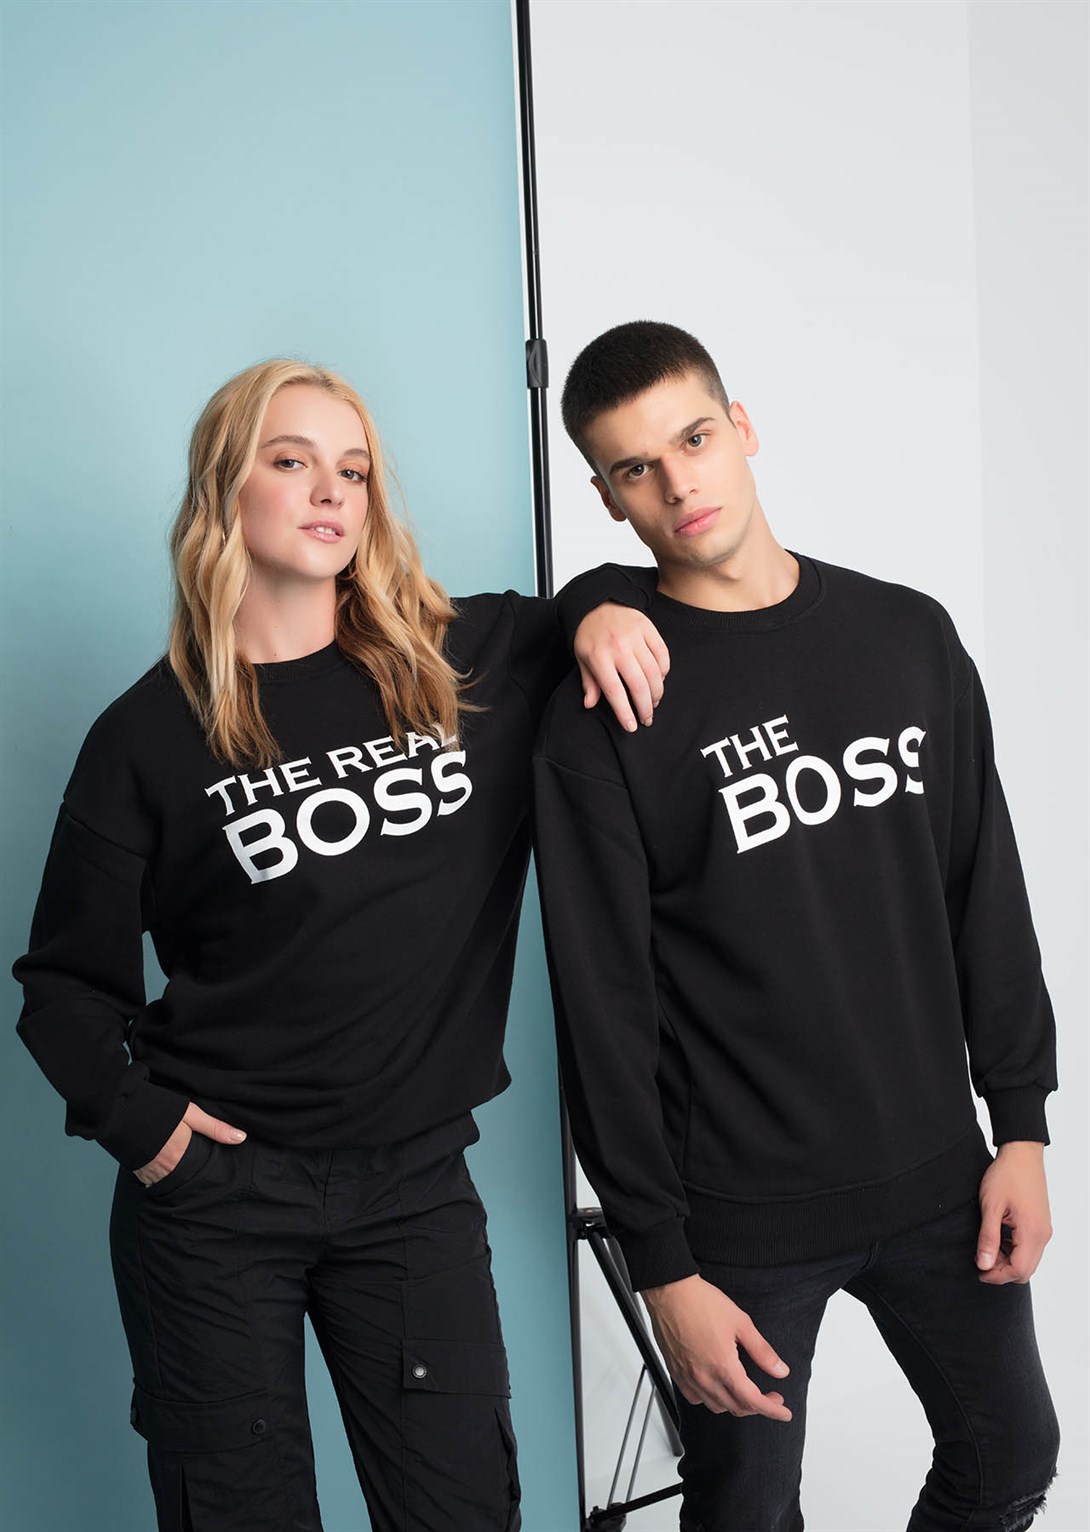 Trendiz The Real Boss Couple Kadın Yuvarlak Yaka Sweatshirt Siyah 121112